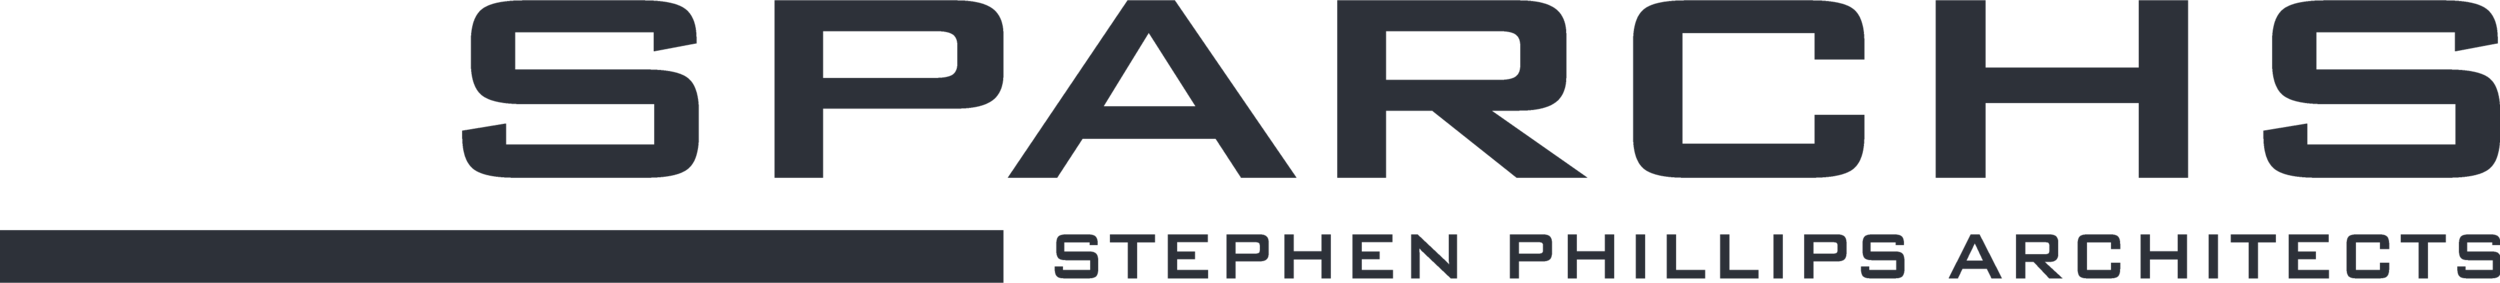 Stephen Phillips Architects